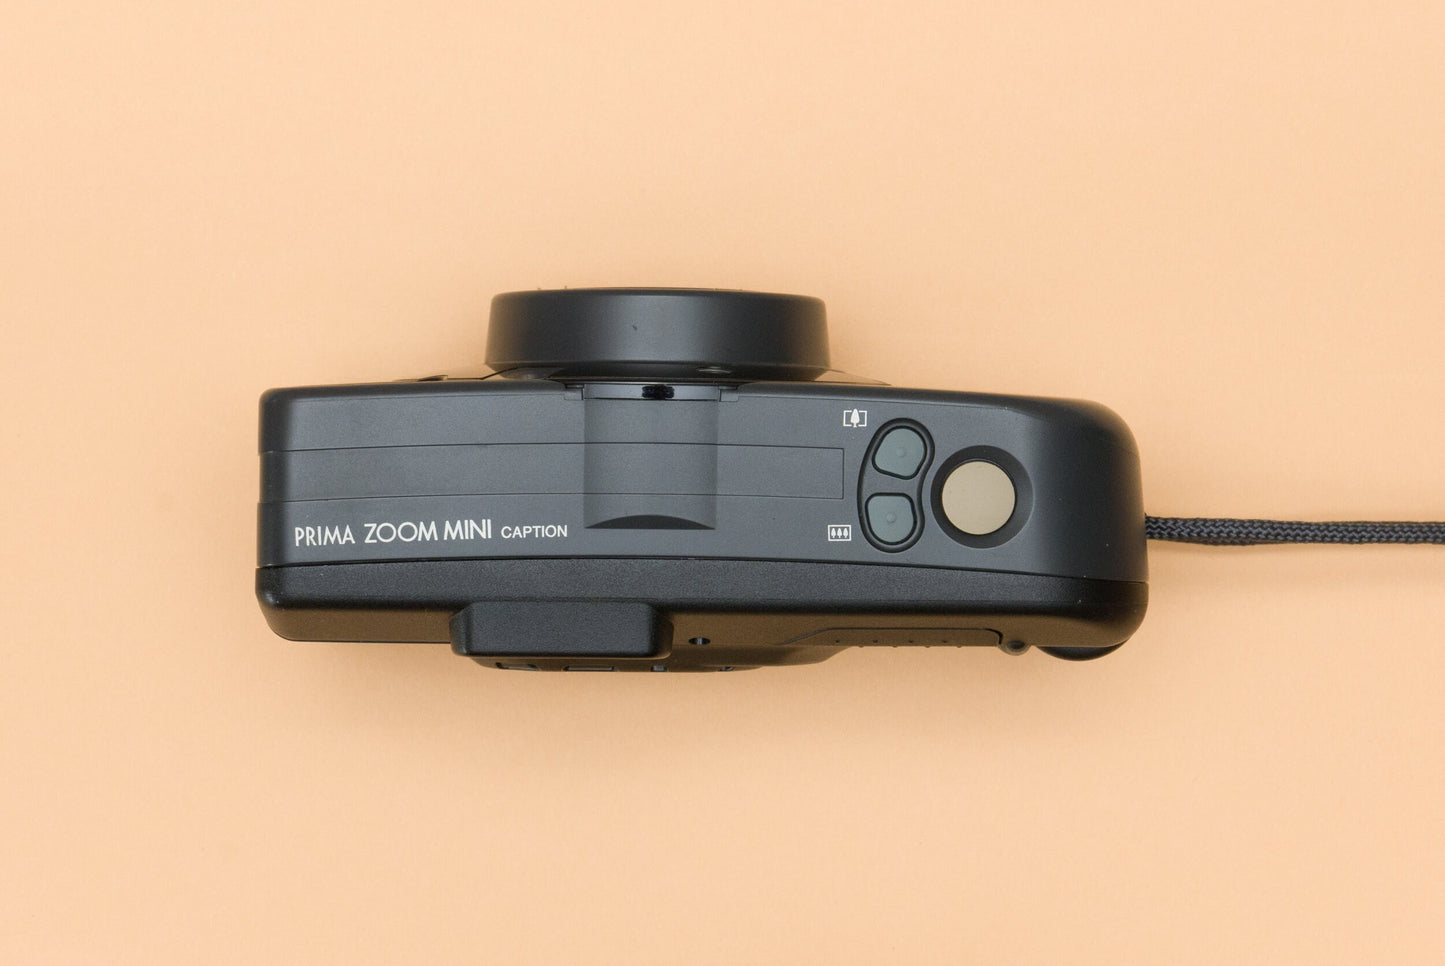 Canon Prima Zoom Mini Caption Compact Point and Shoot 35mm Film Camera